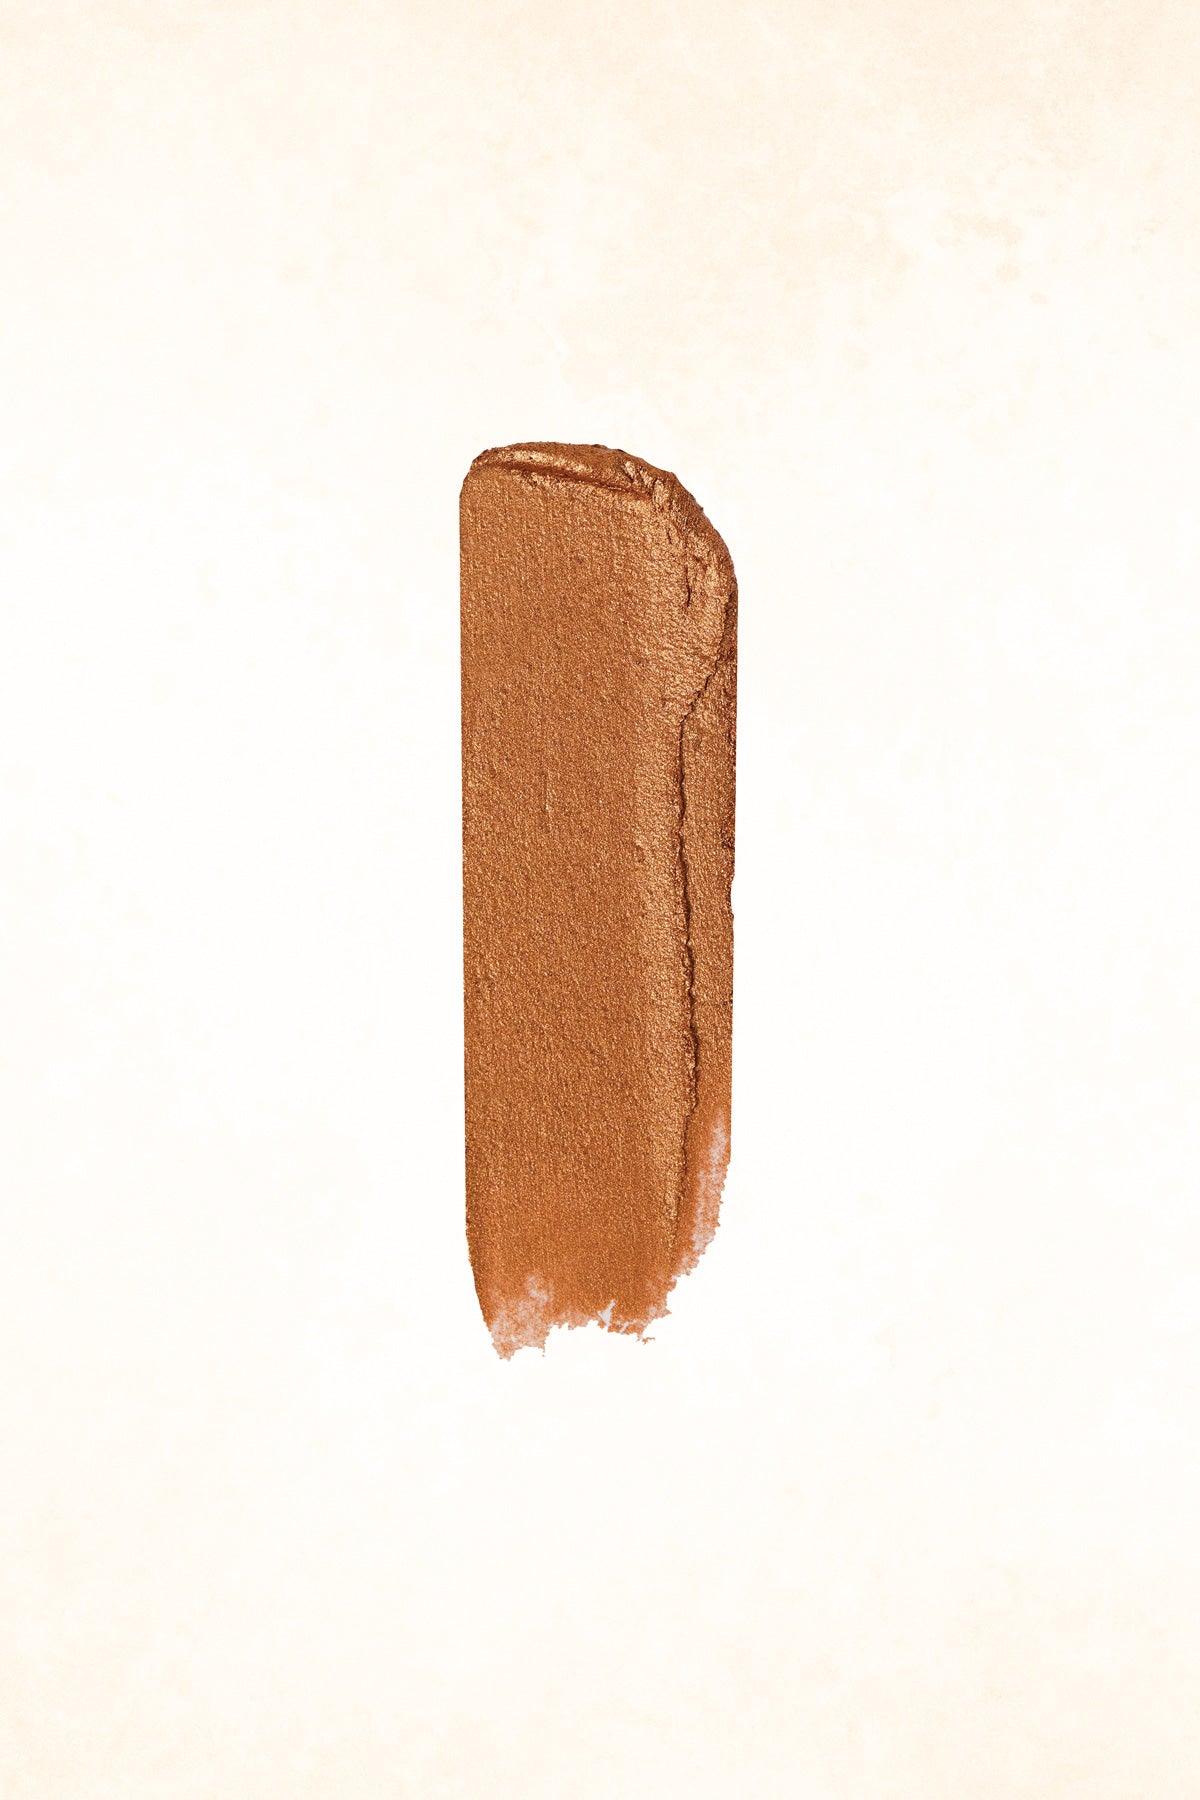 Róen - RoGlow - Skin Stick Highlighter - Tan